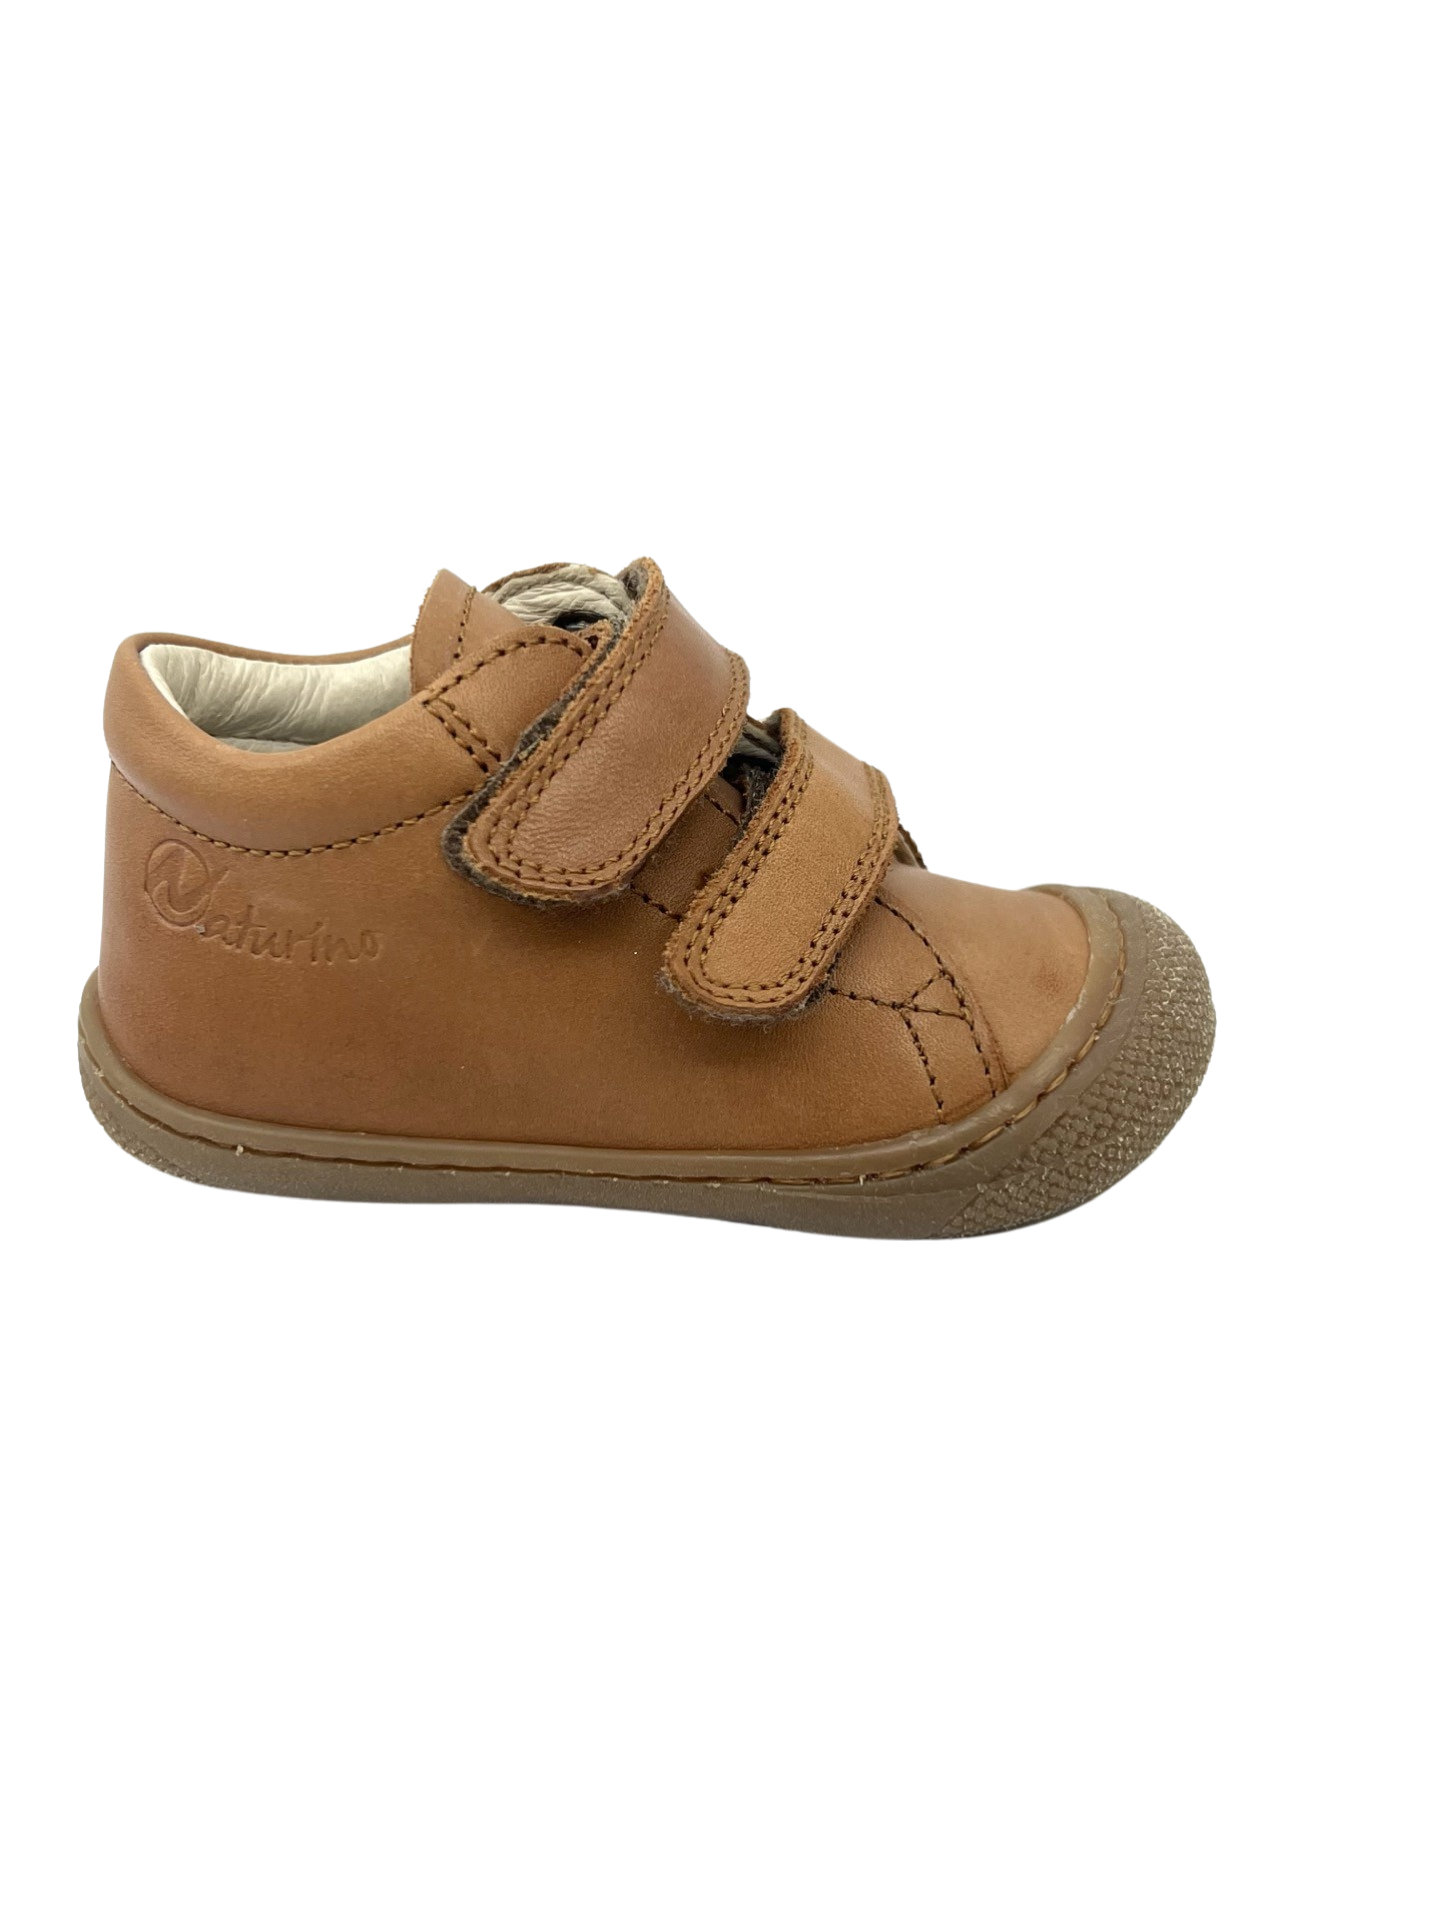 Naturino Brown Double Velcro Sneaker -  Cocoon